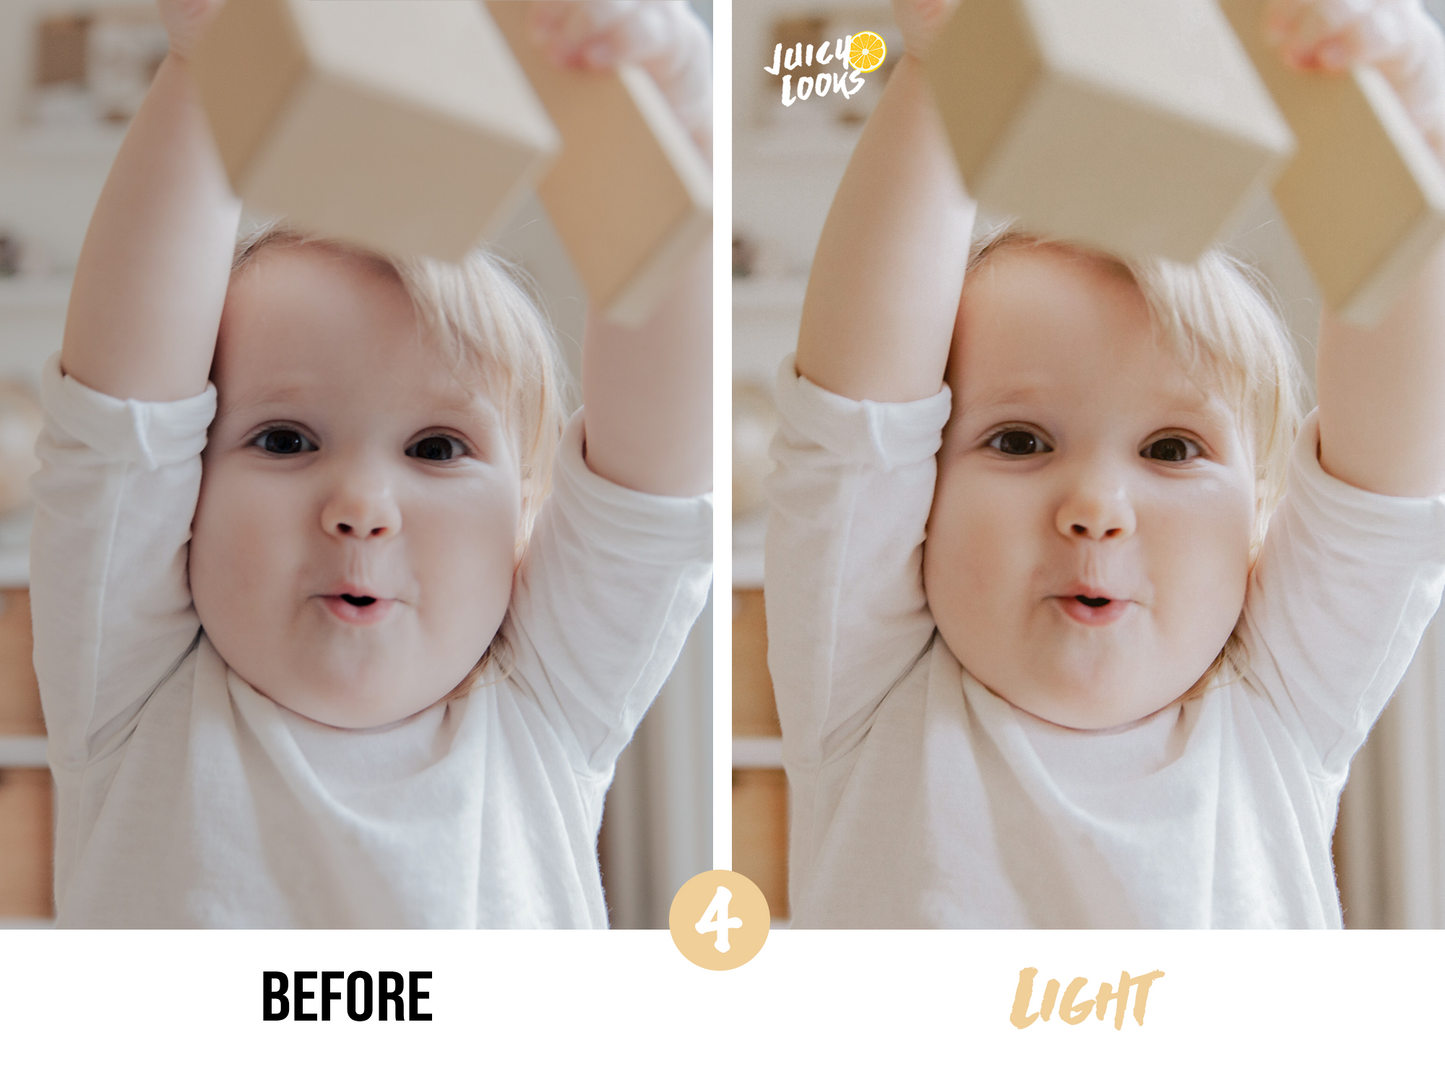 Baby Lightroom Presets for Mobile & Desktop - Juicy Looks Presets